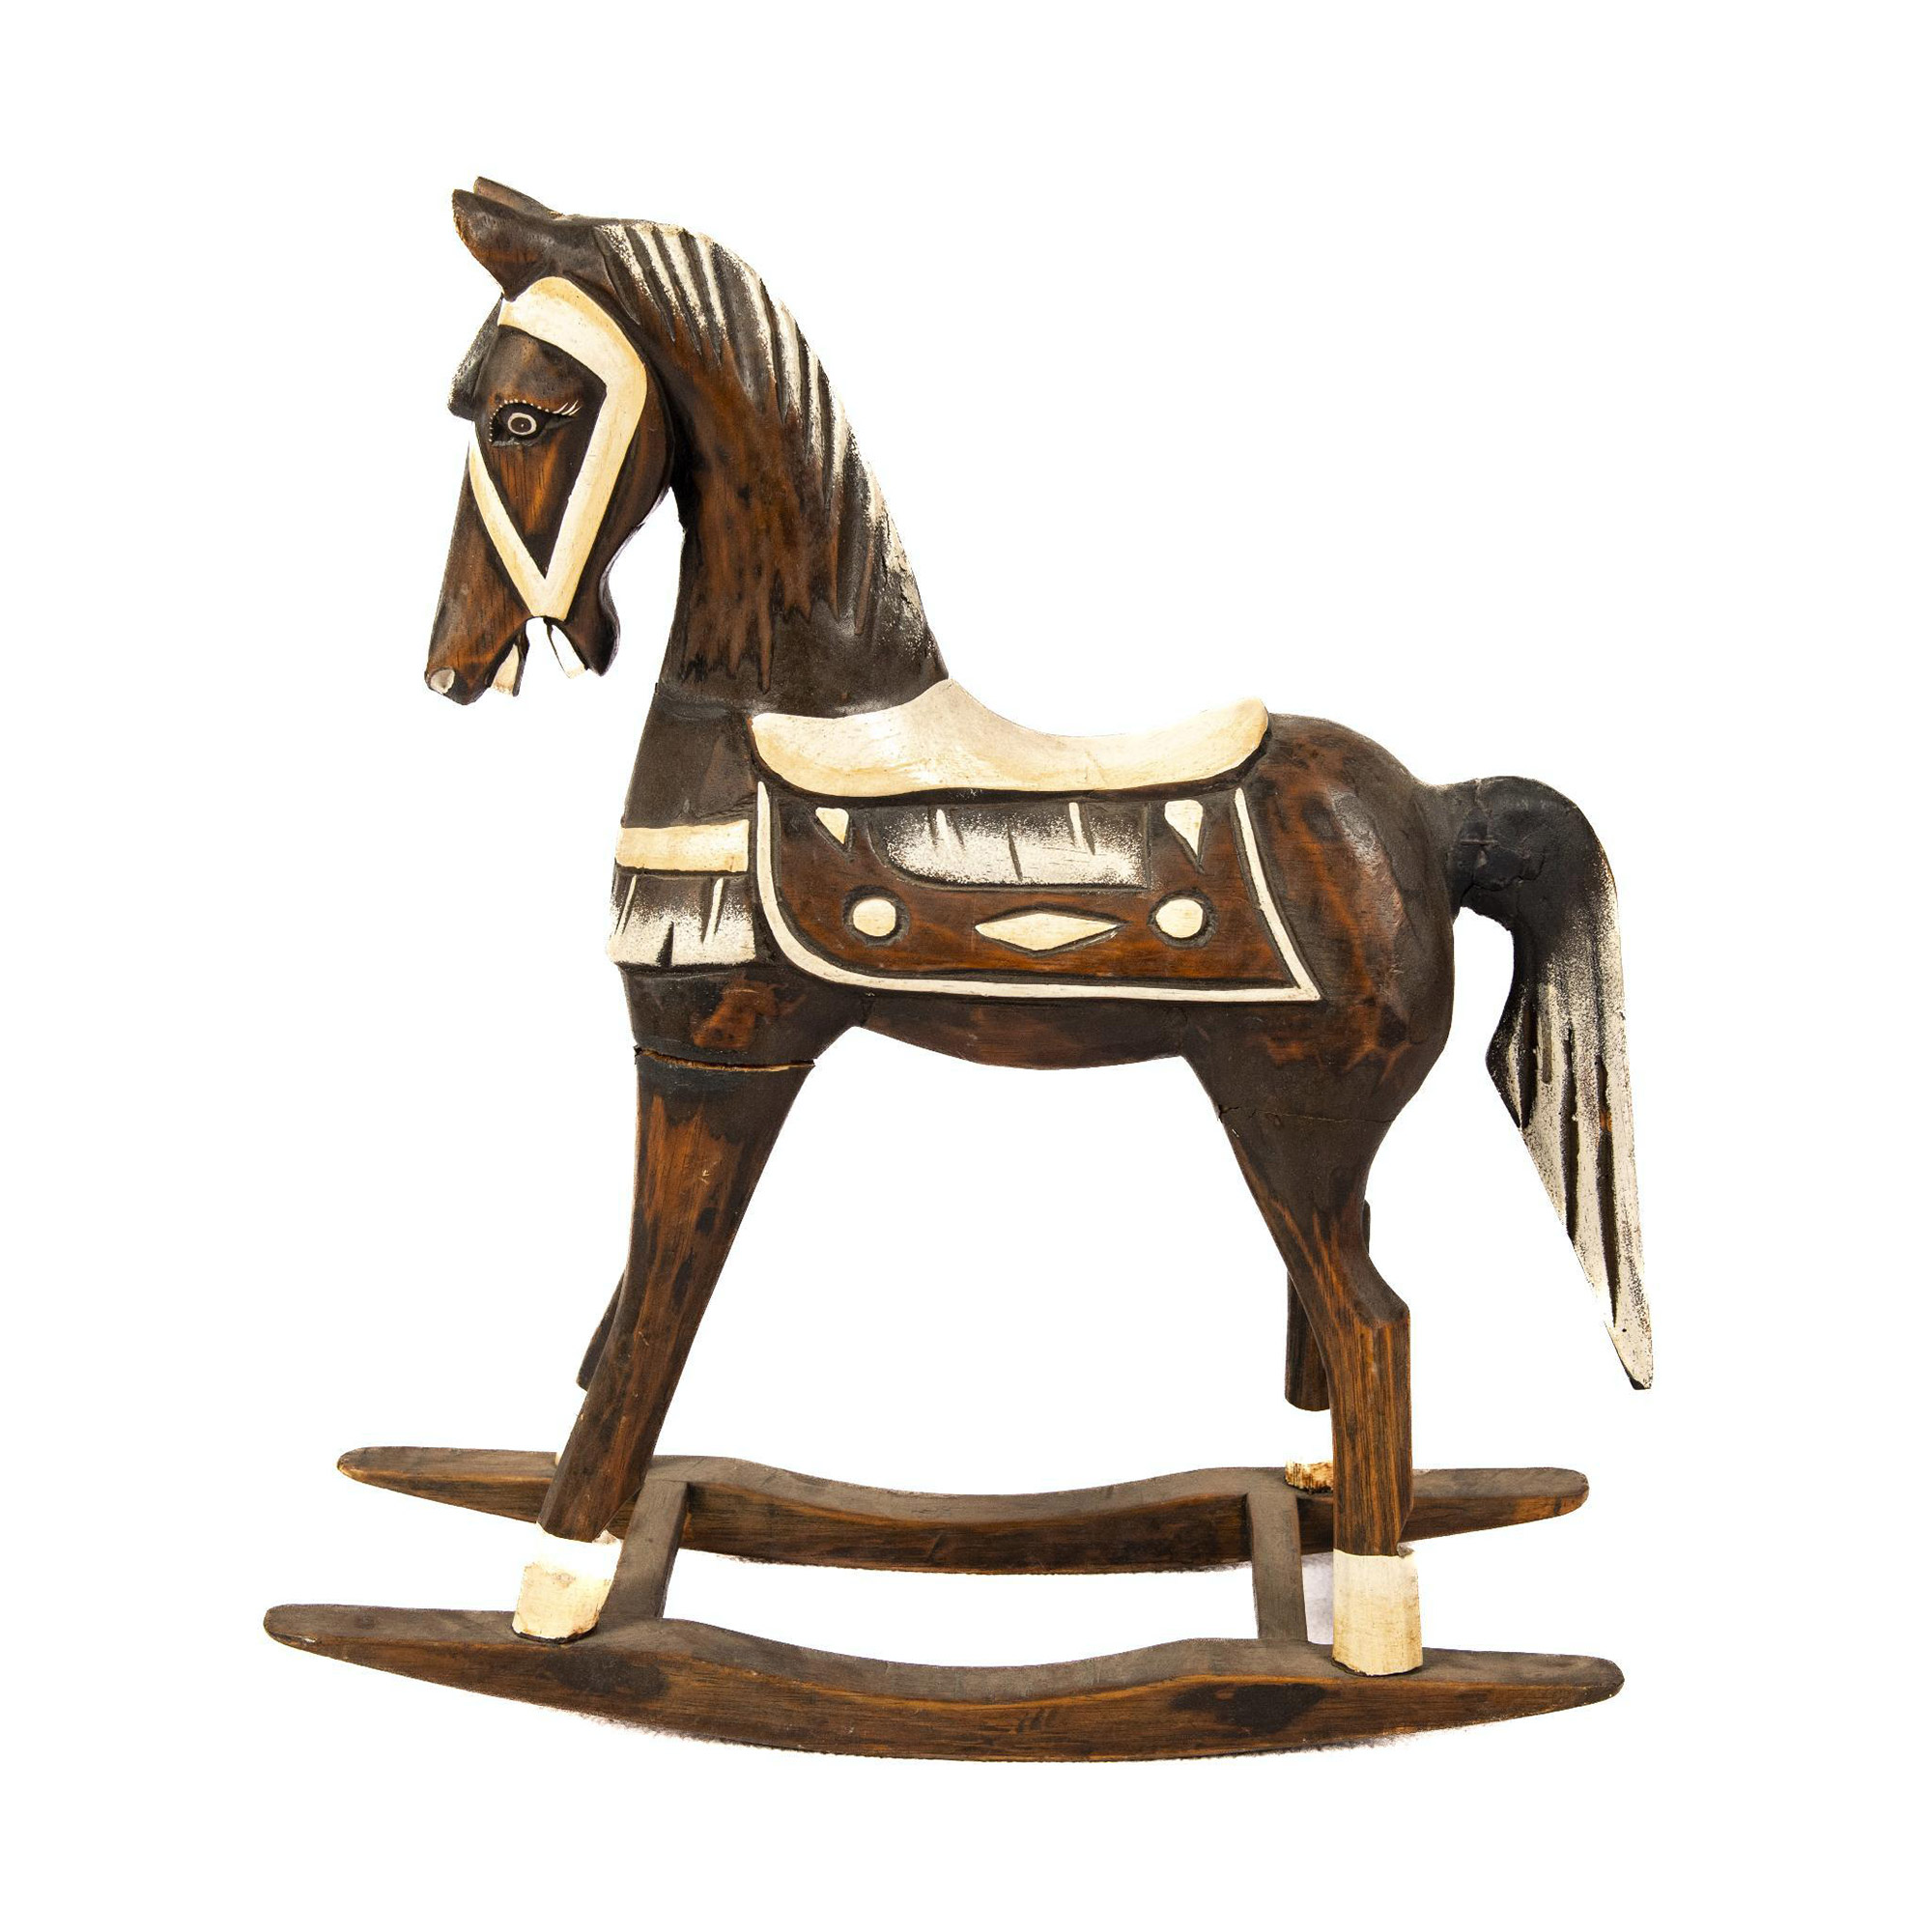 Decorative Rocking Horse Wood Carving - Image 3 of 5